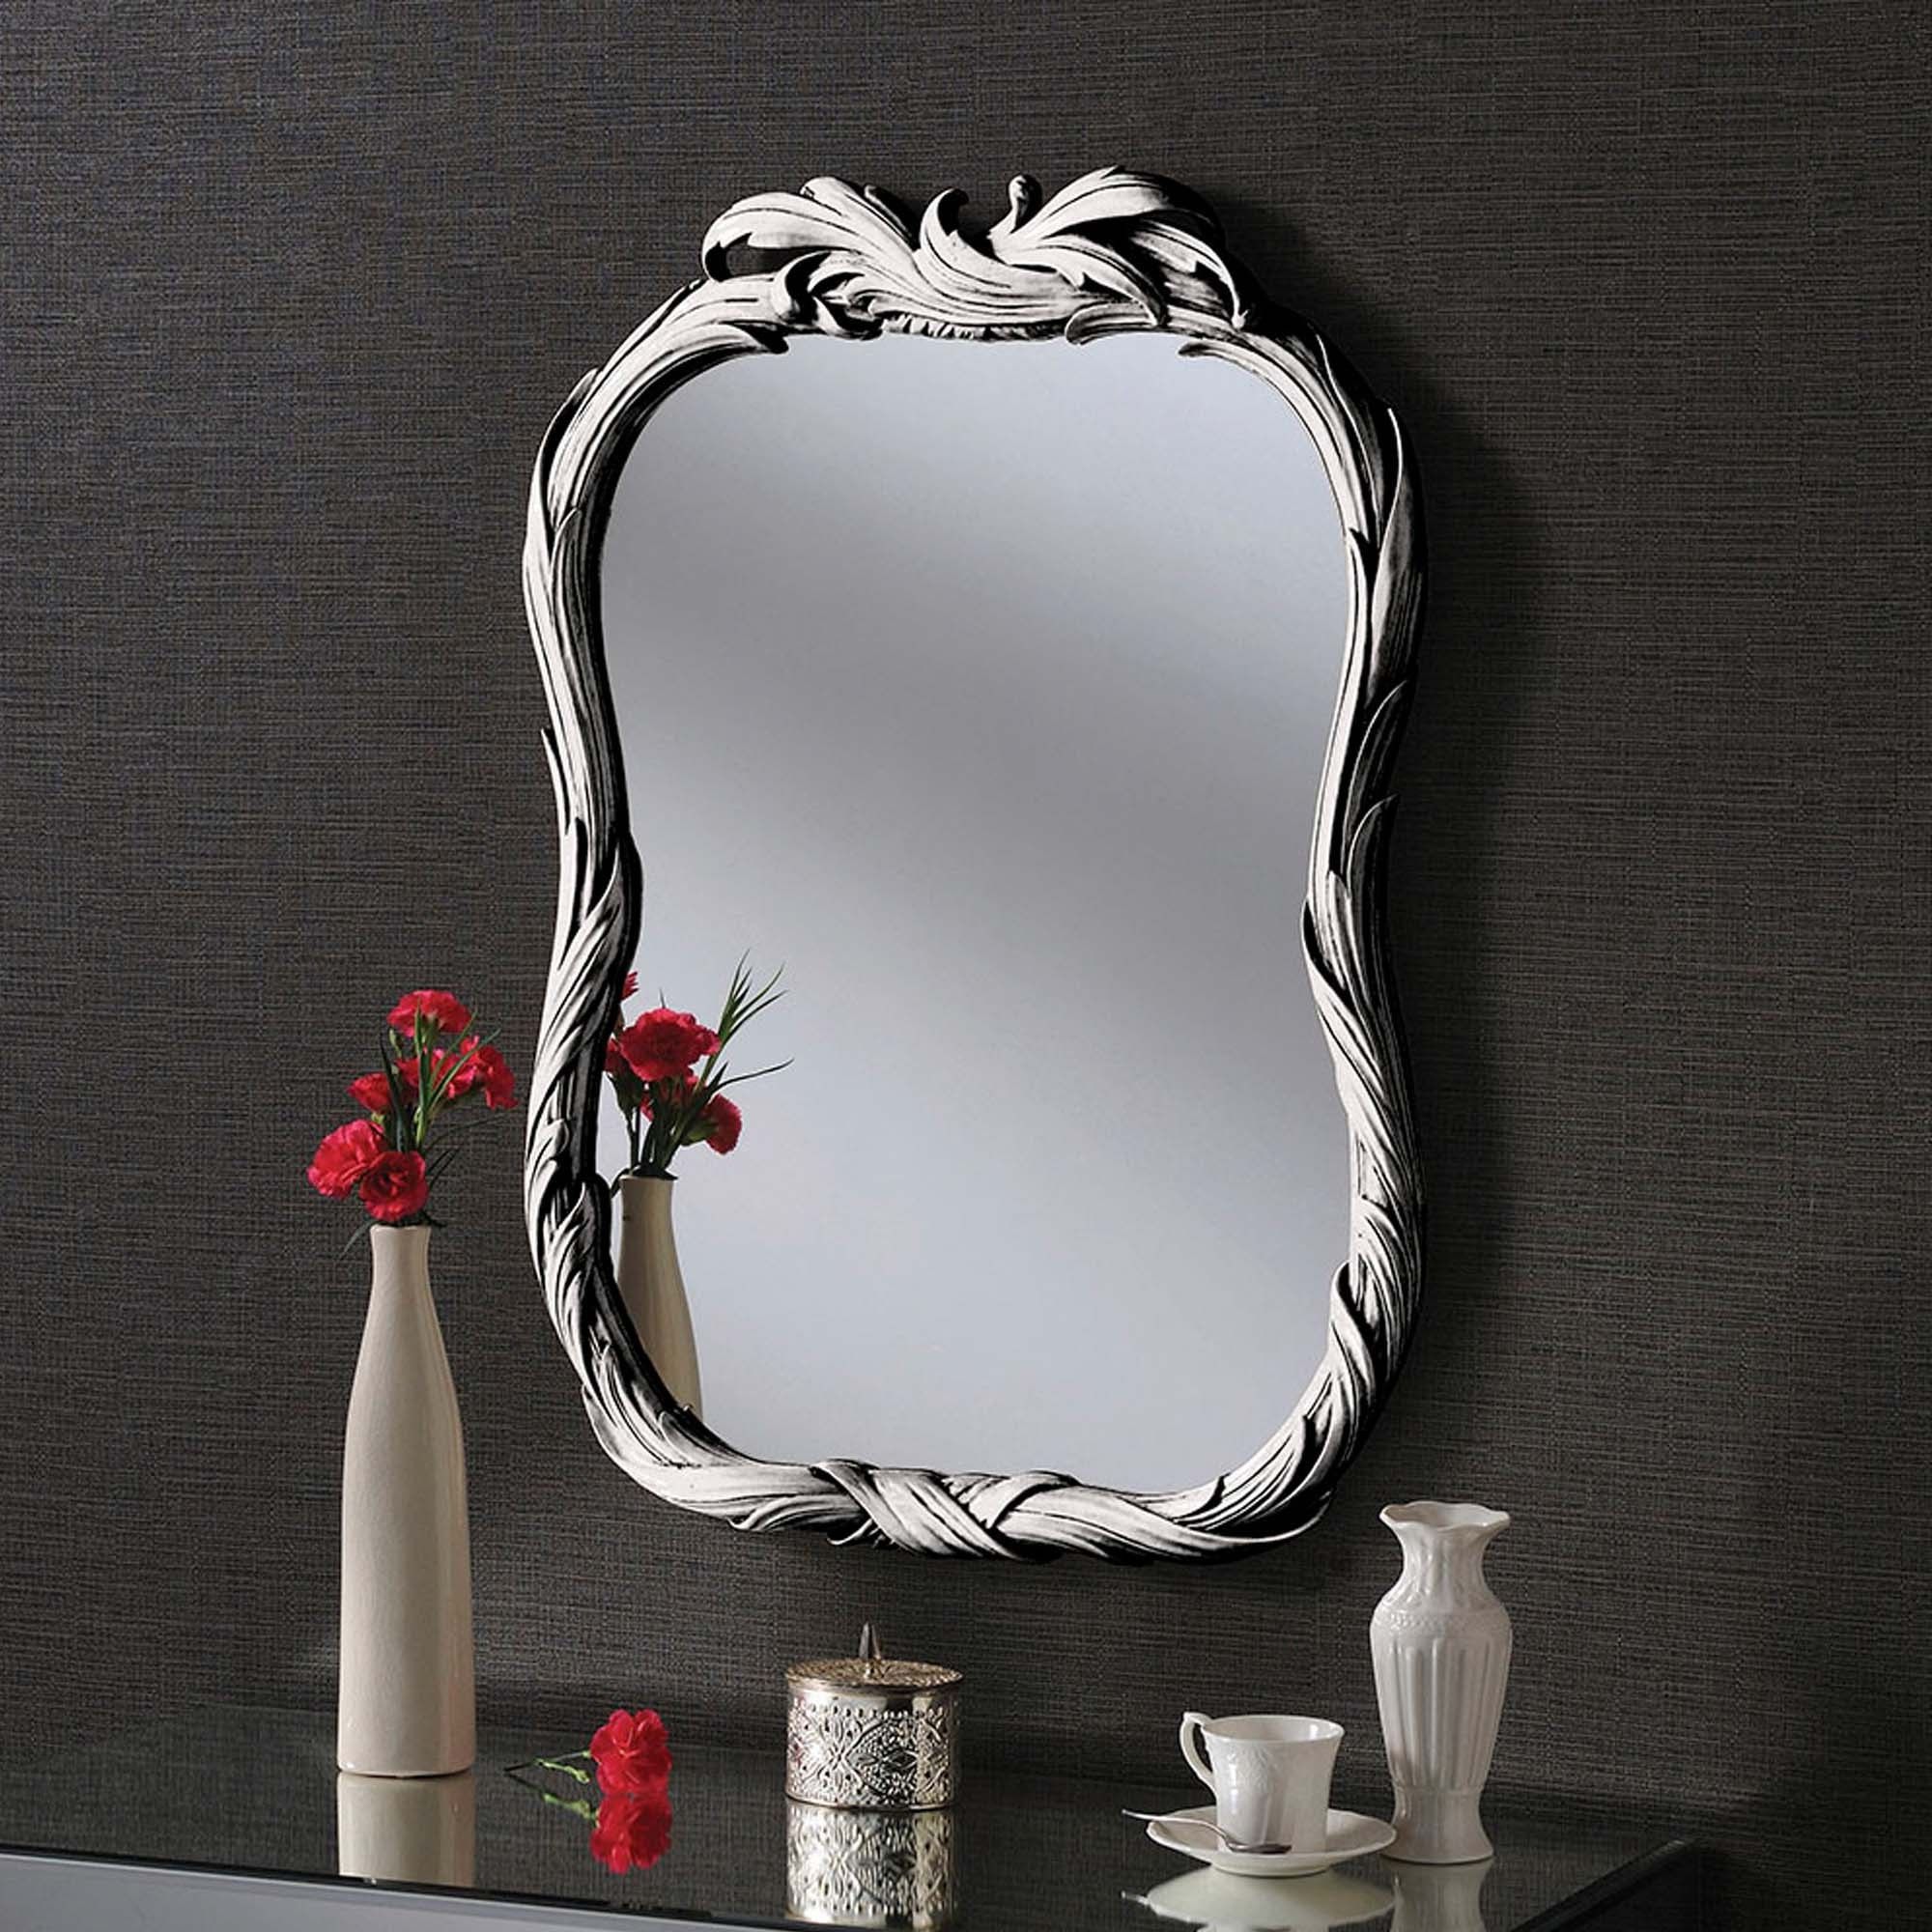 Decorative Silver Ornate Oval Wall Mirror Regarding Famous Silver Oval Wall Mirrors (View 16 of 20)